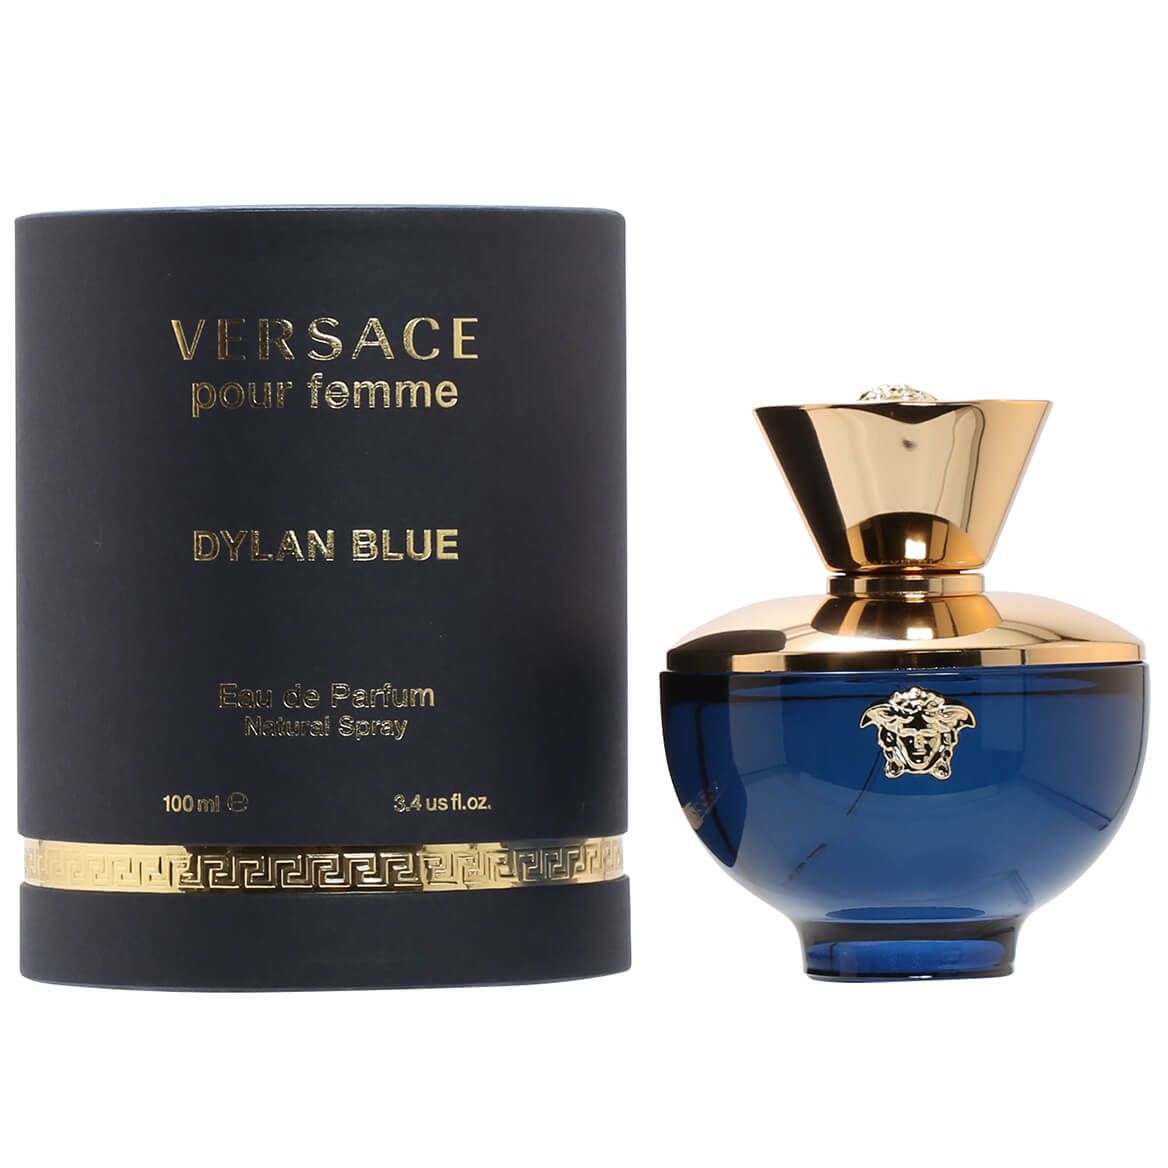 Versace Dylan Blue for Women EDP, 3.4 fl. oz. + '-' + 377153